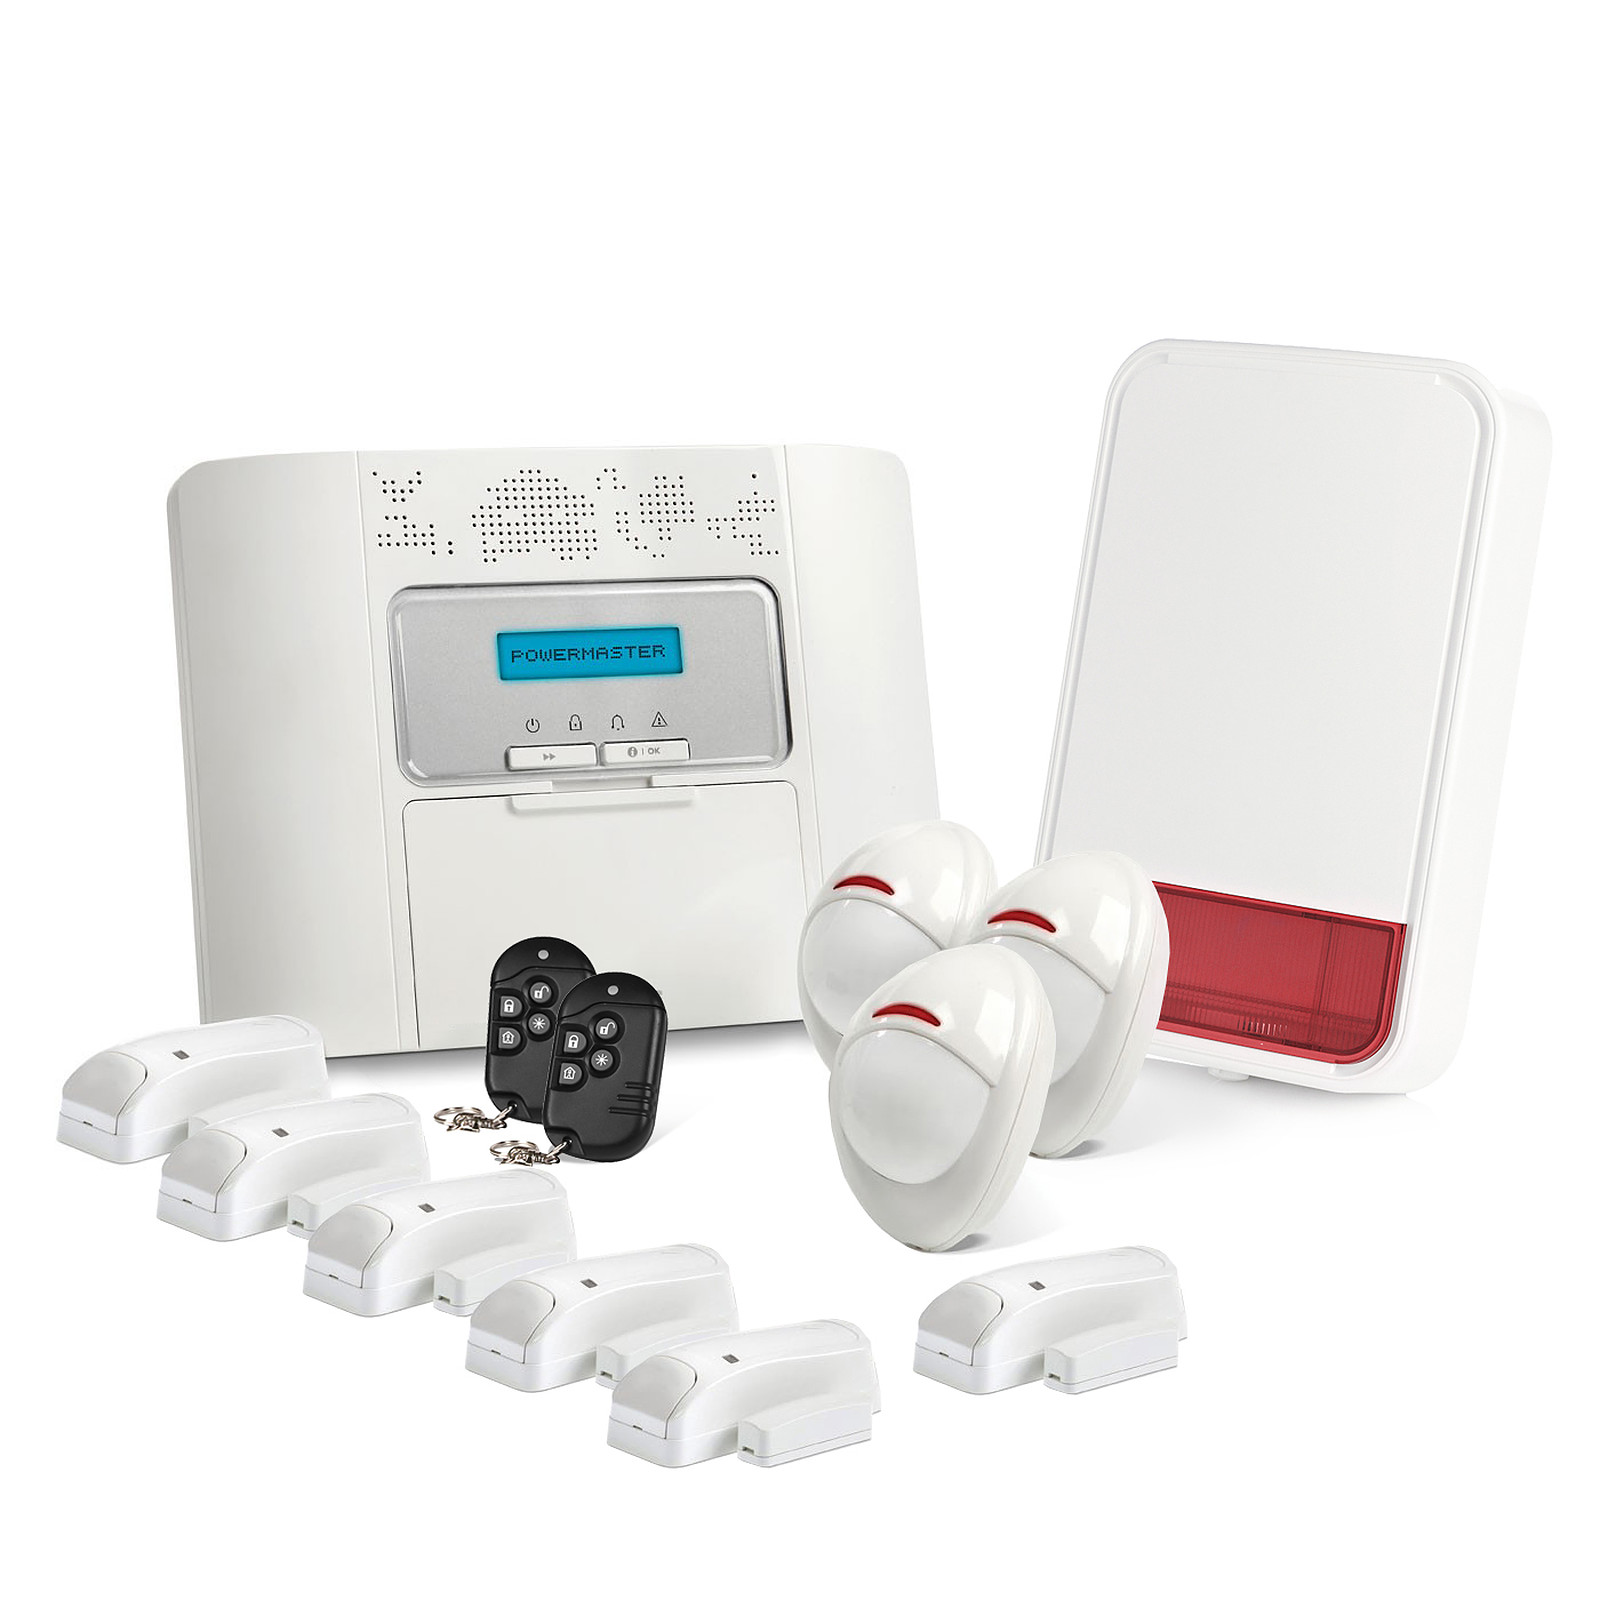 Visonic - Alarme maison PowerMaster 30 - Kit 01 - Kit alarme Visonic